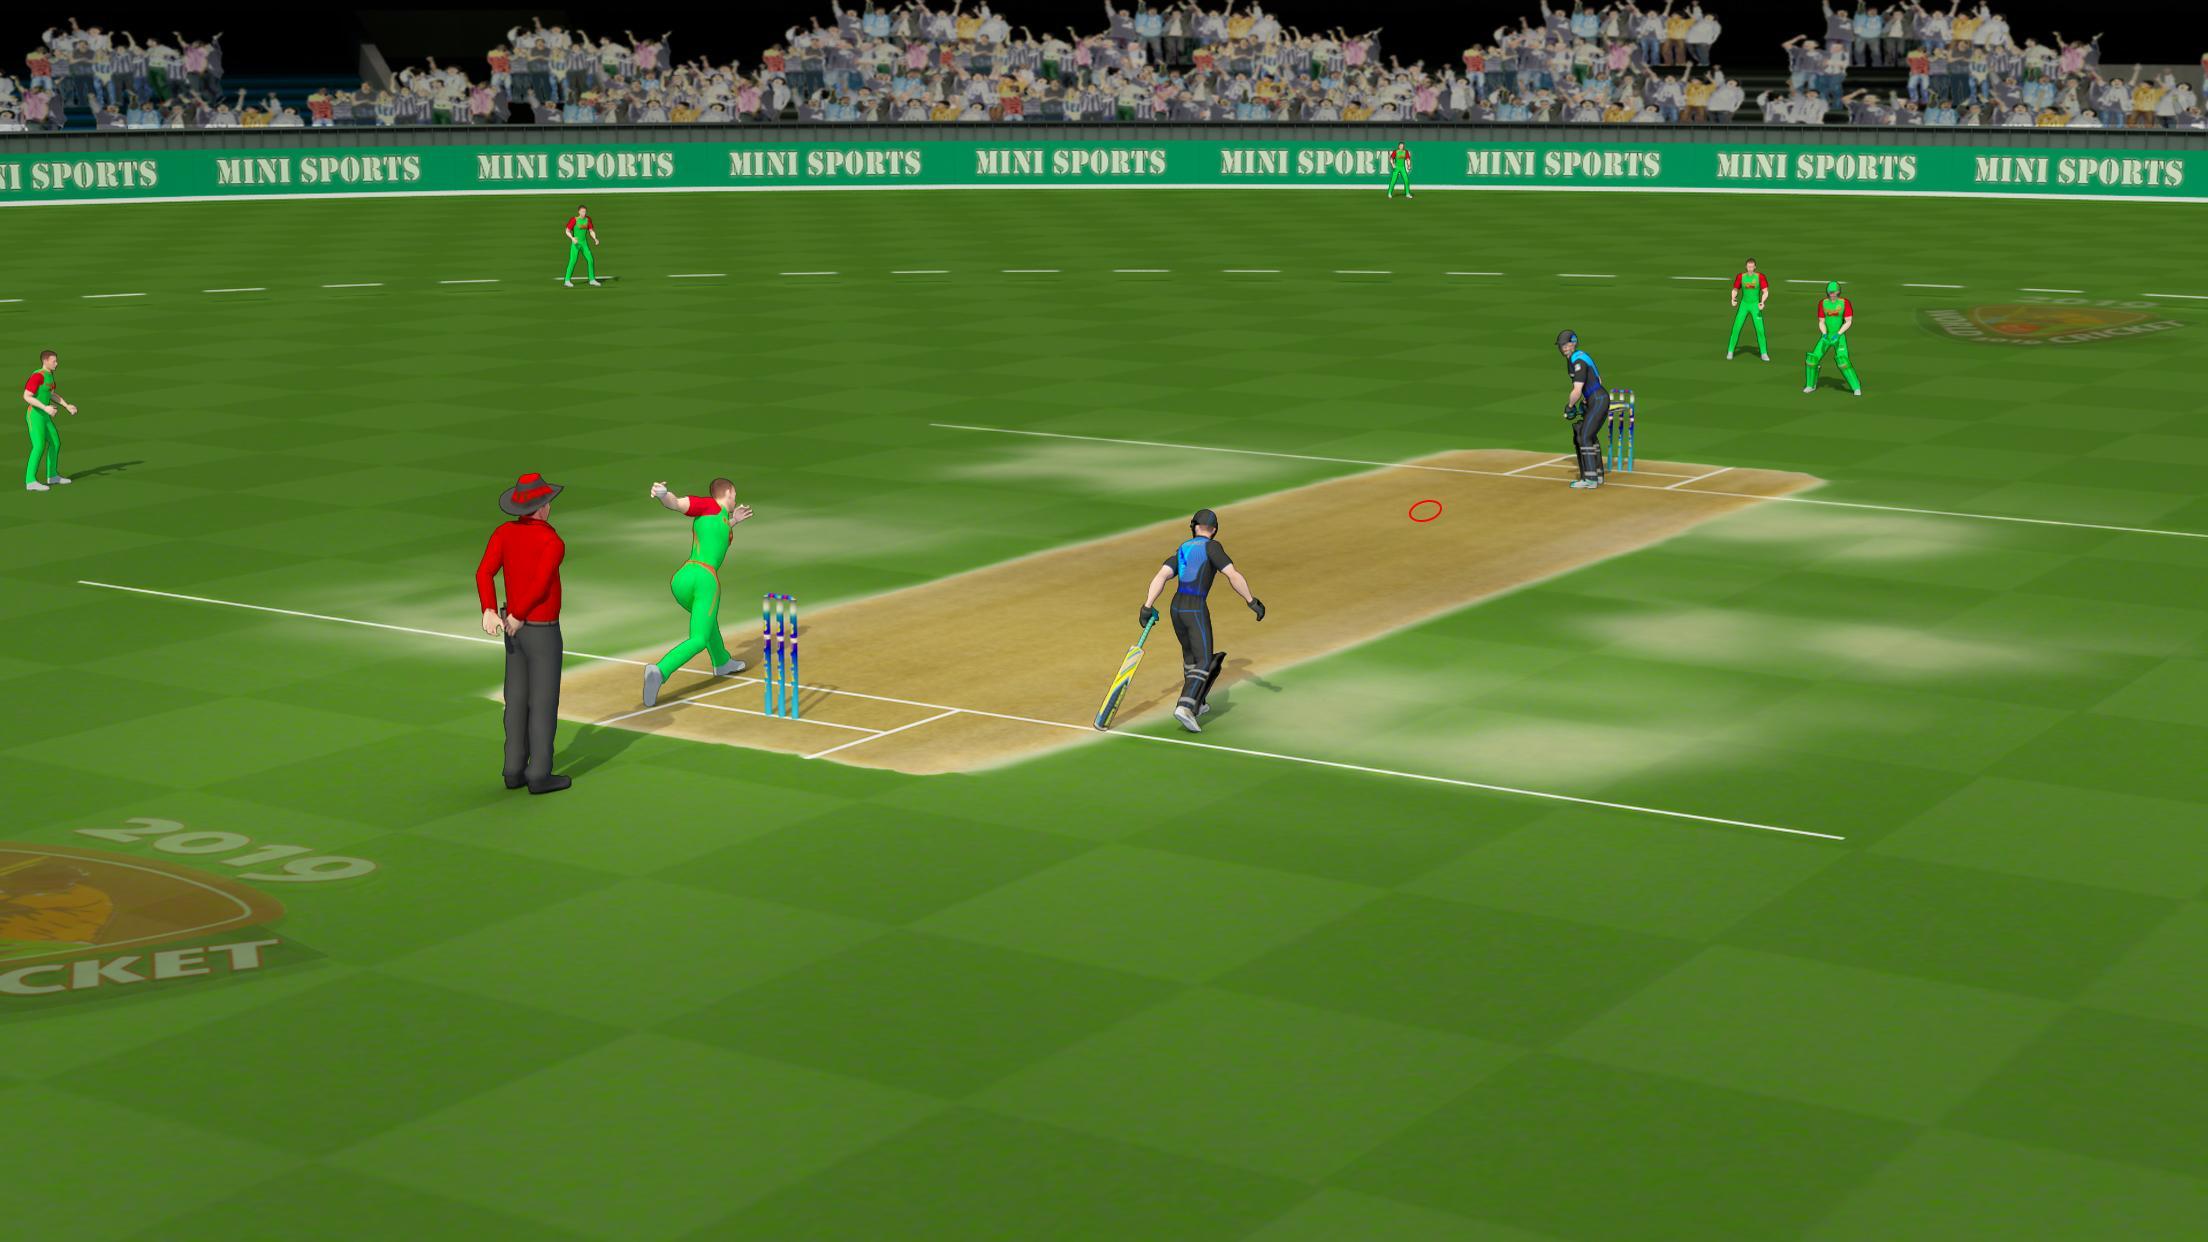 7 game live. Cricket World Cup игра. Cricket Live игра. Крикет плей игры рекорд в игре.